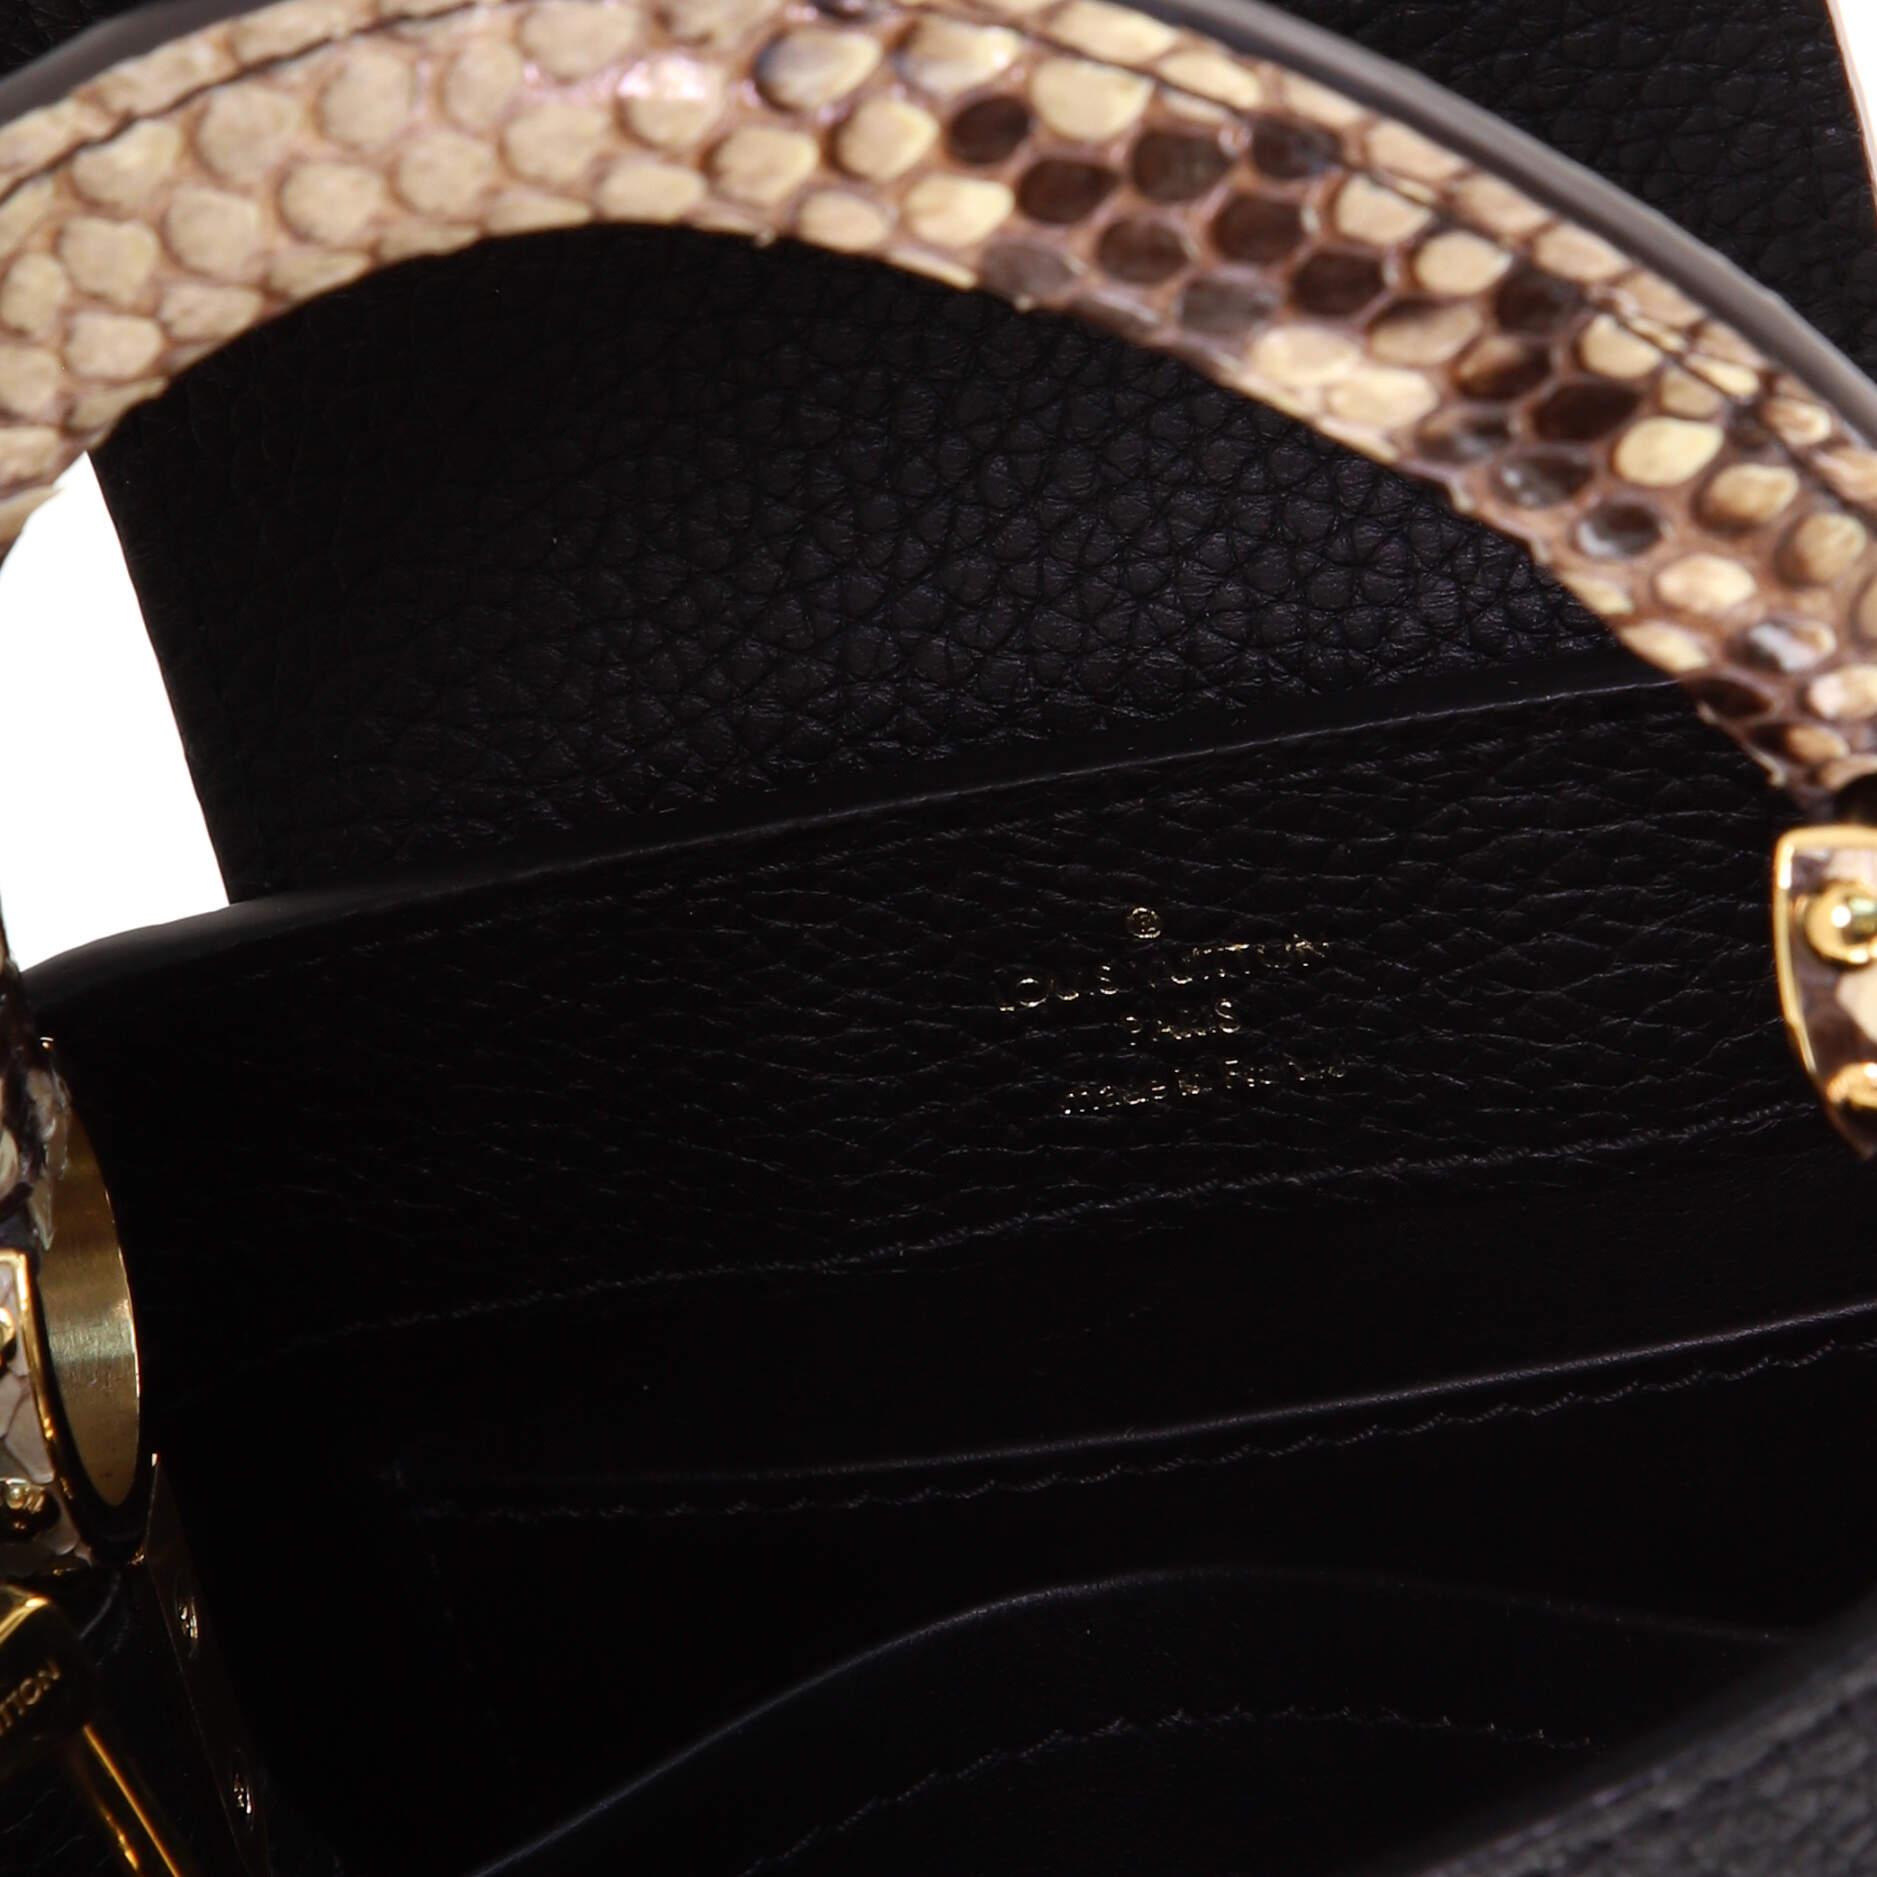 Women's or Men's Louis Vuitton Capucines Bag Leather with Python Mini